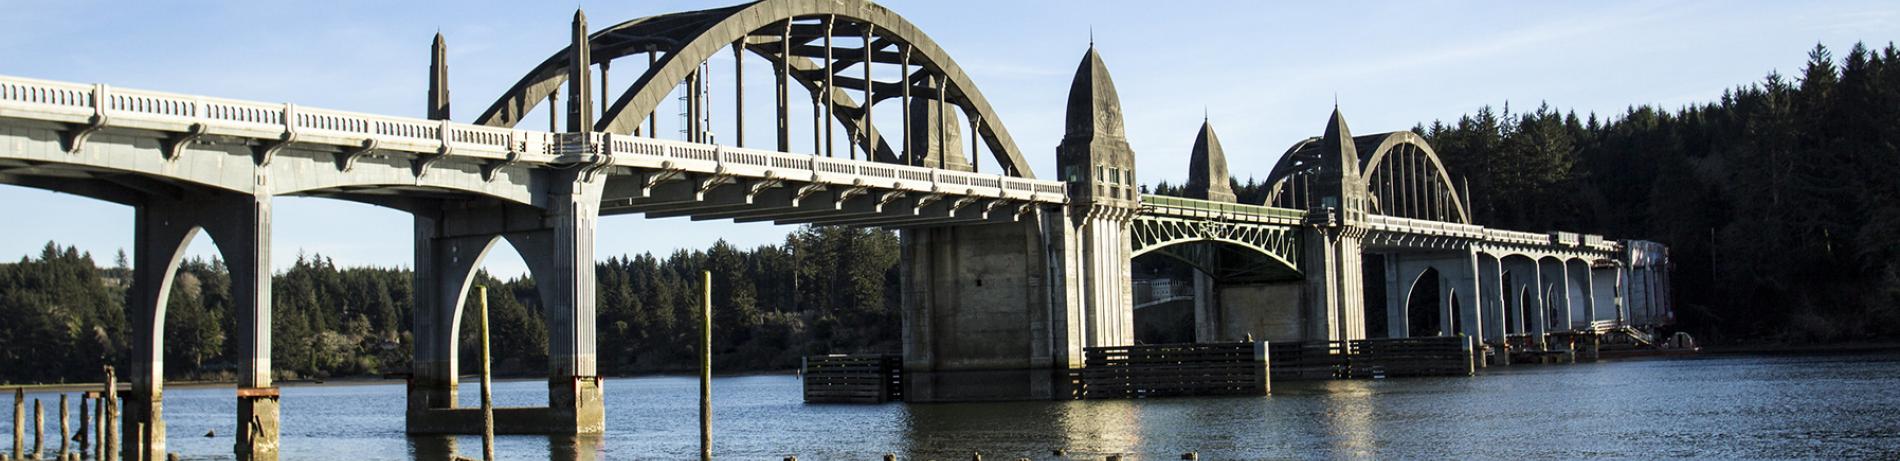 Siuslaw River Bridge, in Florence, Oregon